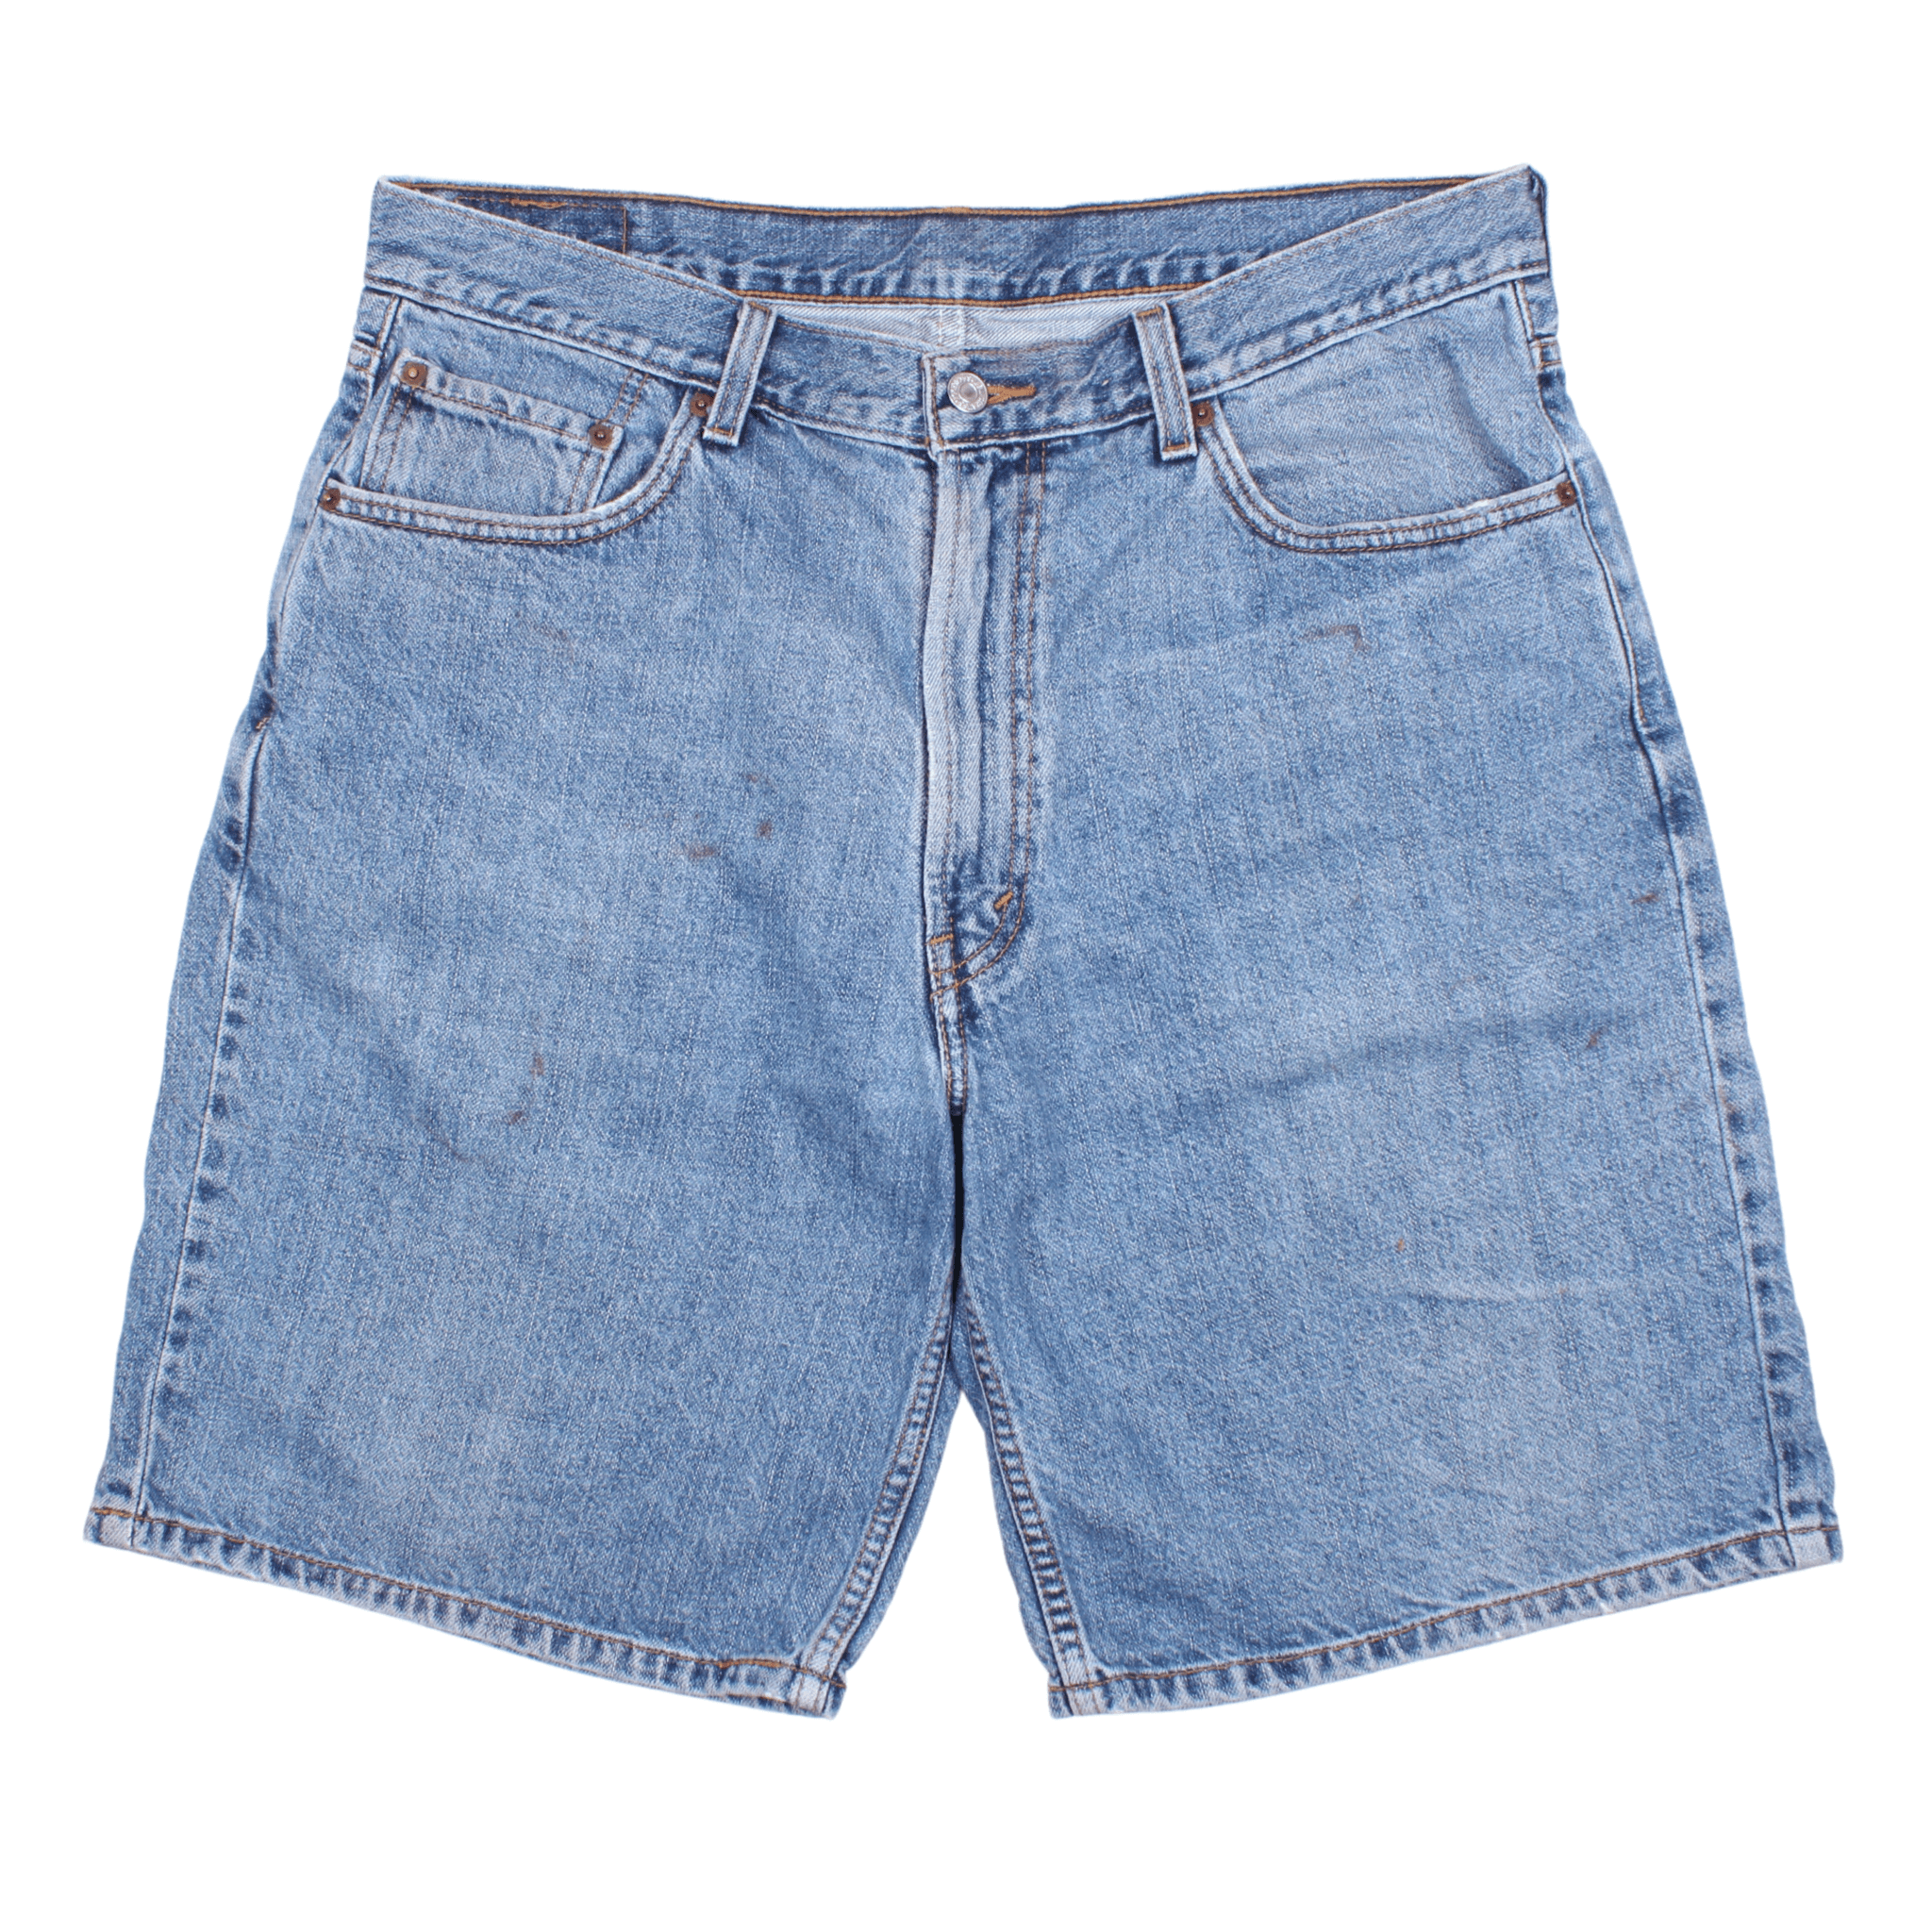 Vintage Levis Denim Shorts (36